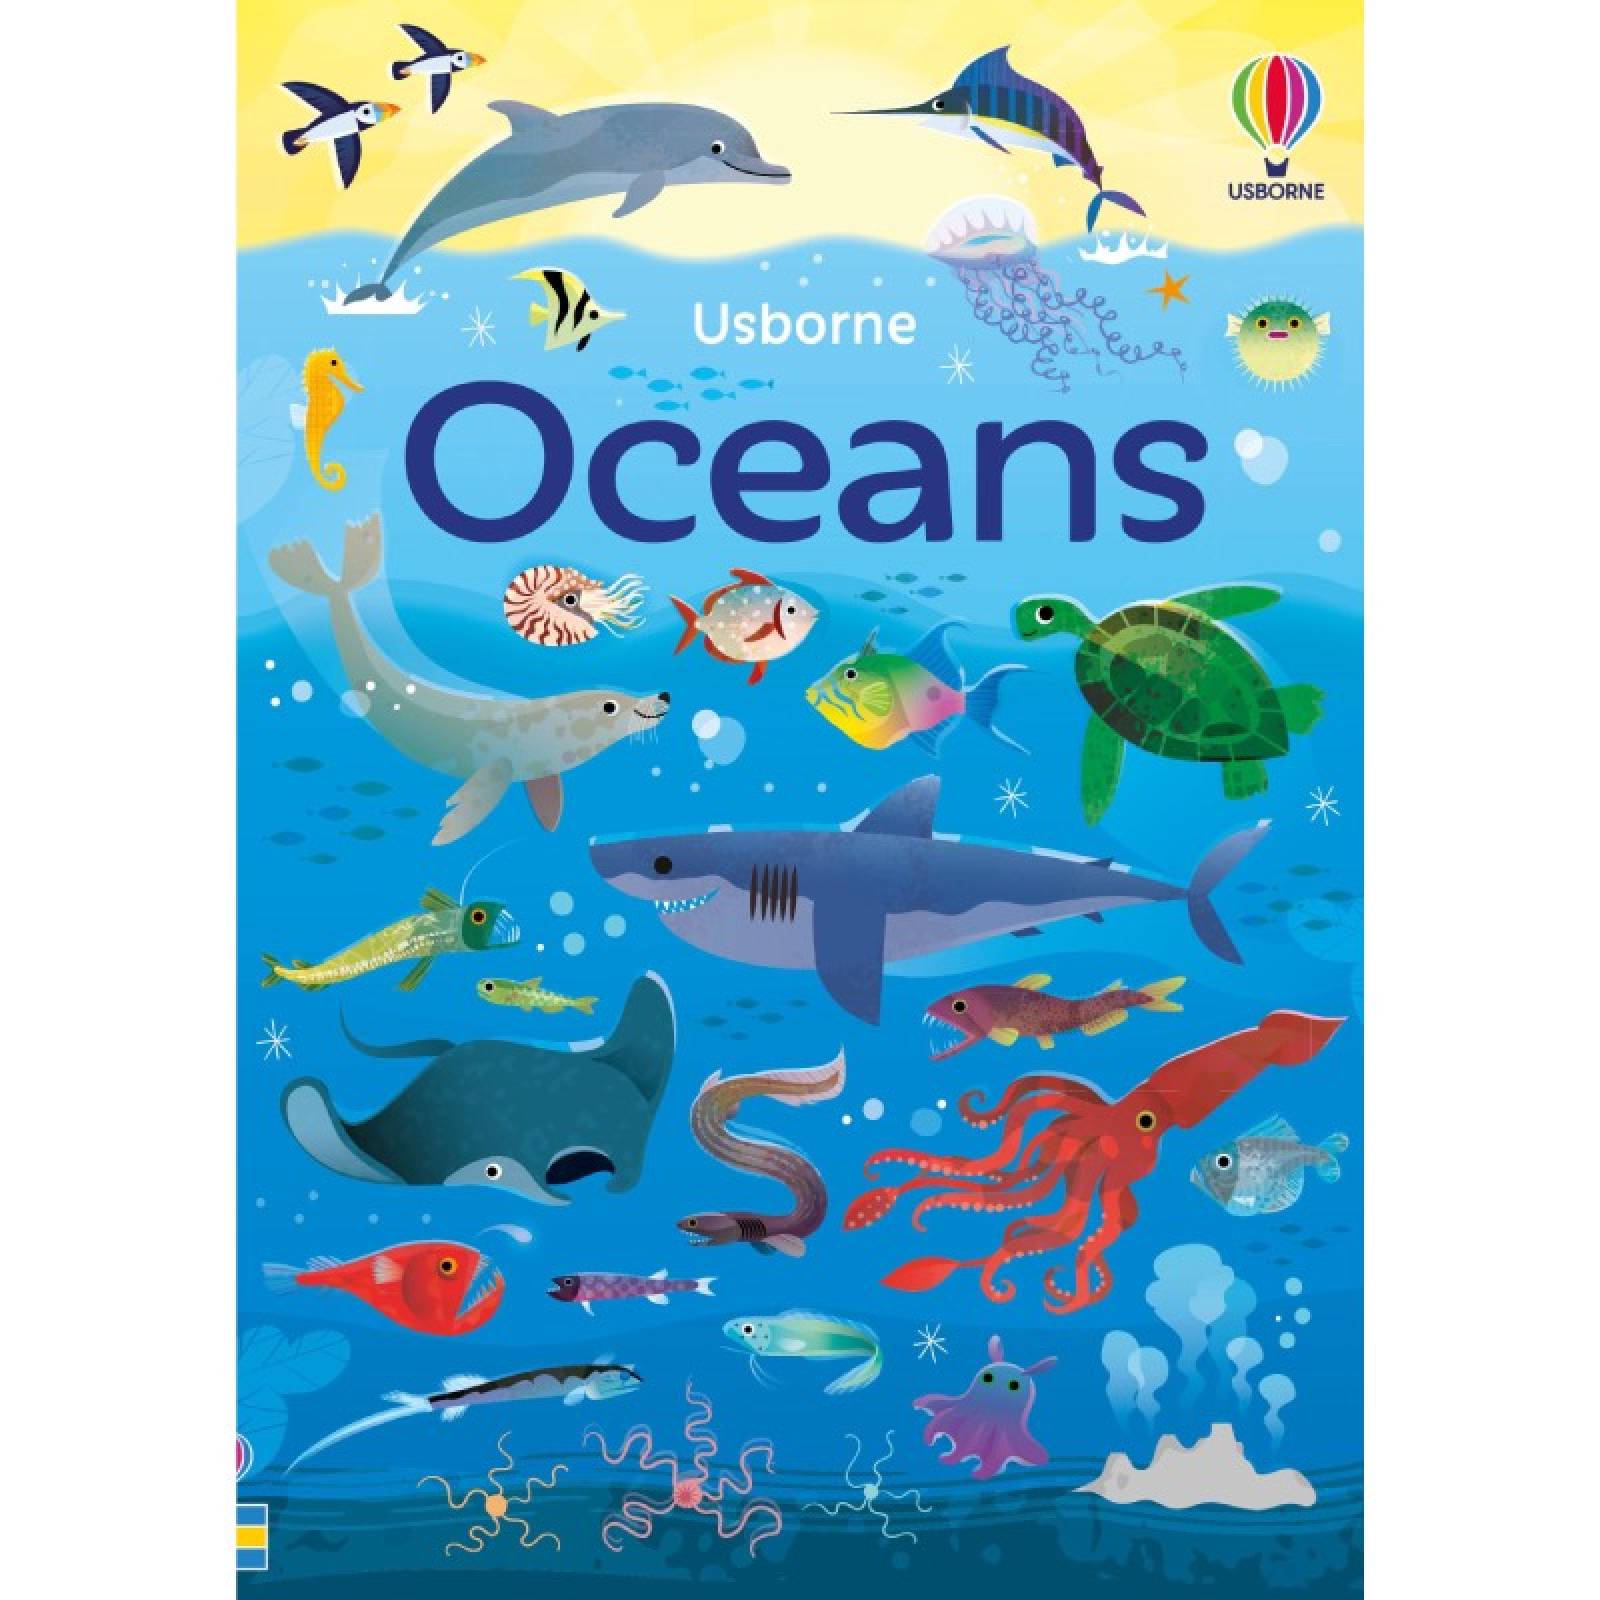 Oceans - 300 Piece Jigsaw Puzzle & Book thumbnails